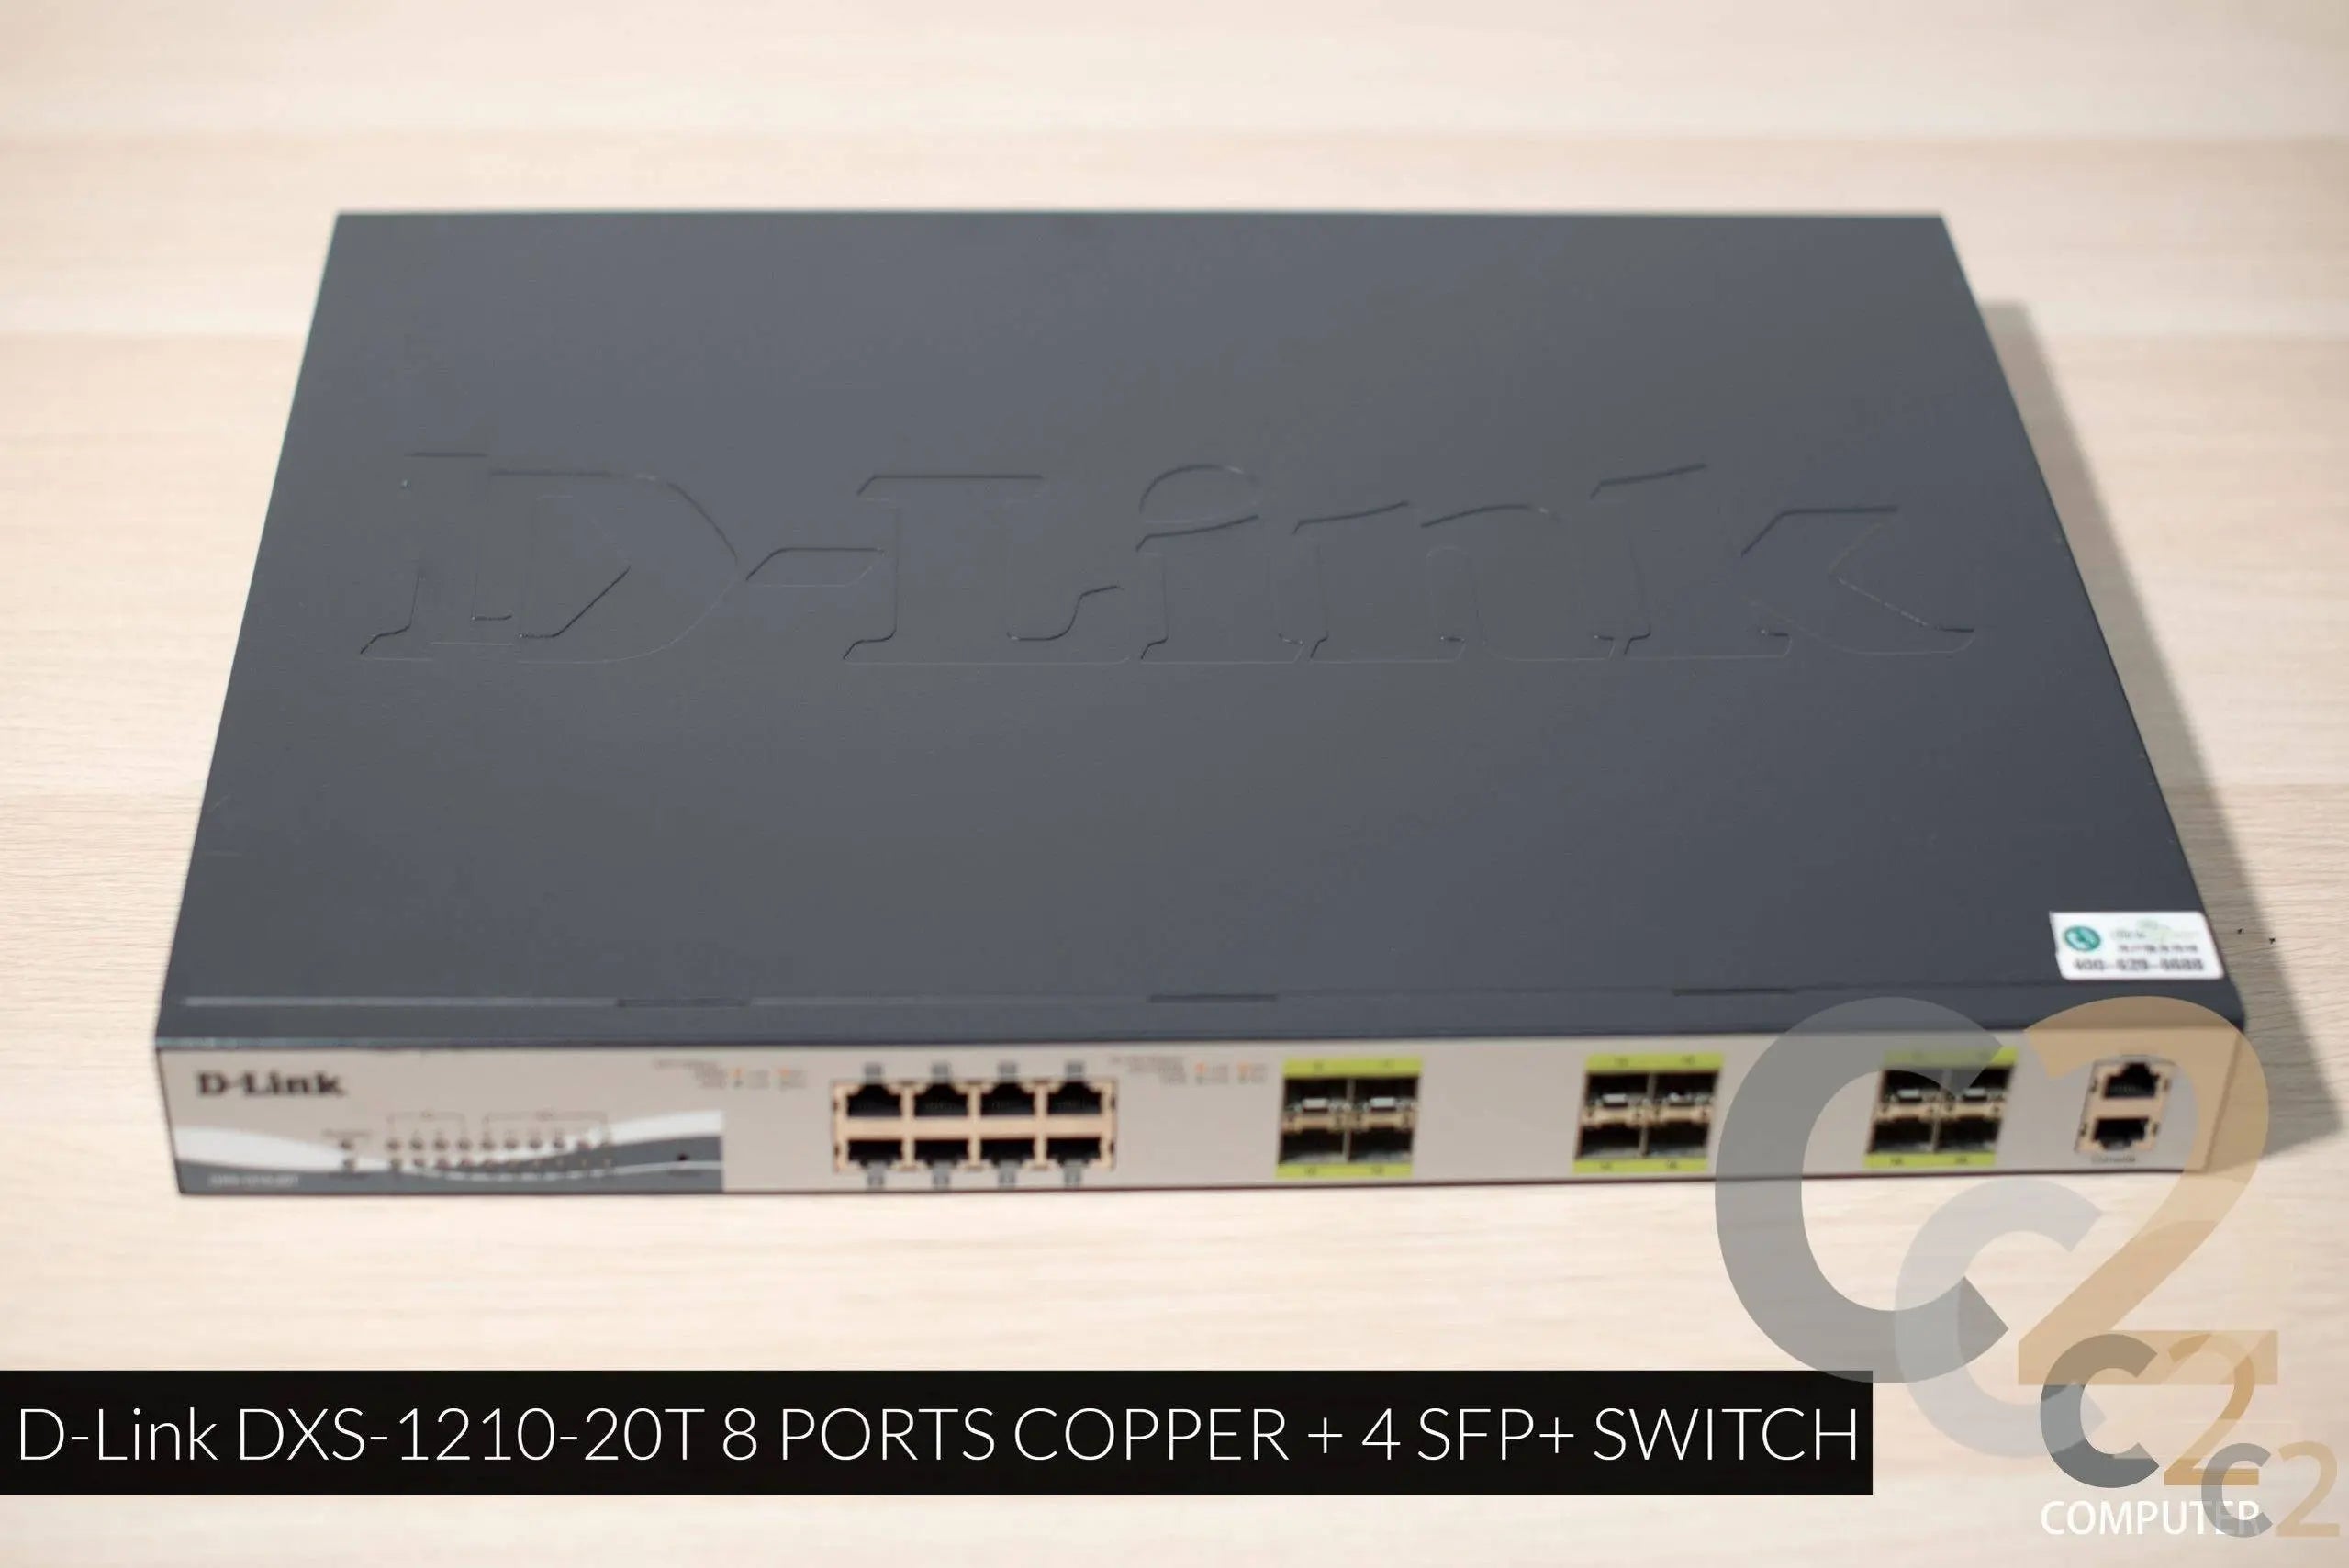 (特價一台) D-Link DXS-1210-20T 8 PORTS COPPER + 4 SFP+ SWITCH 80% NEW D-Link